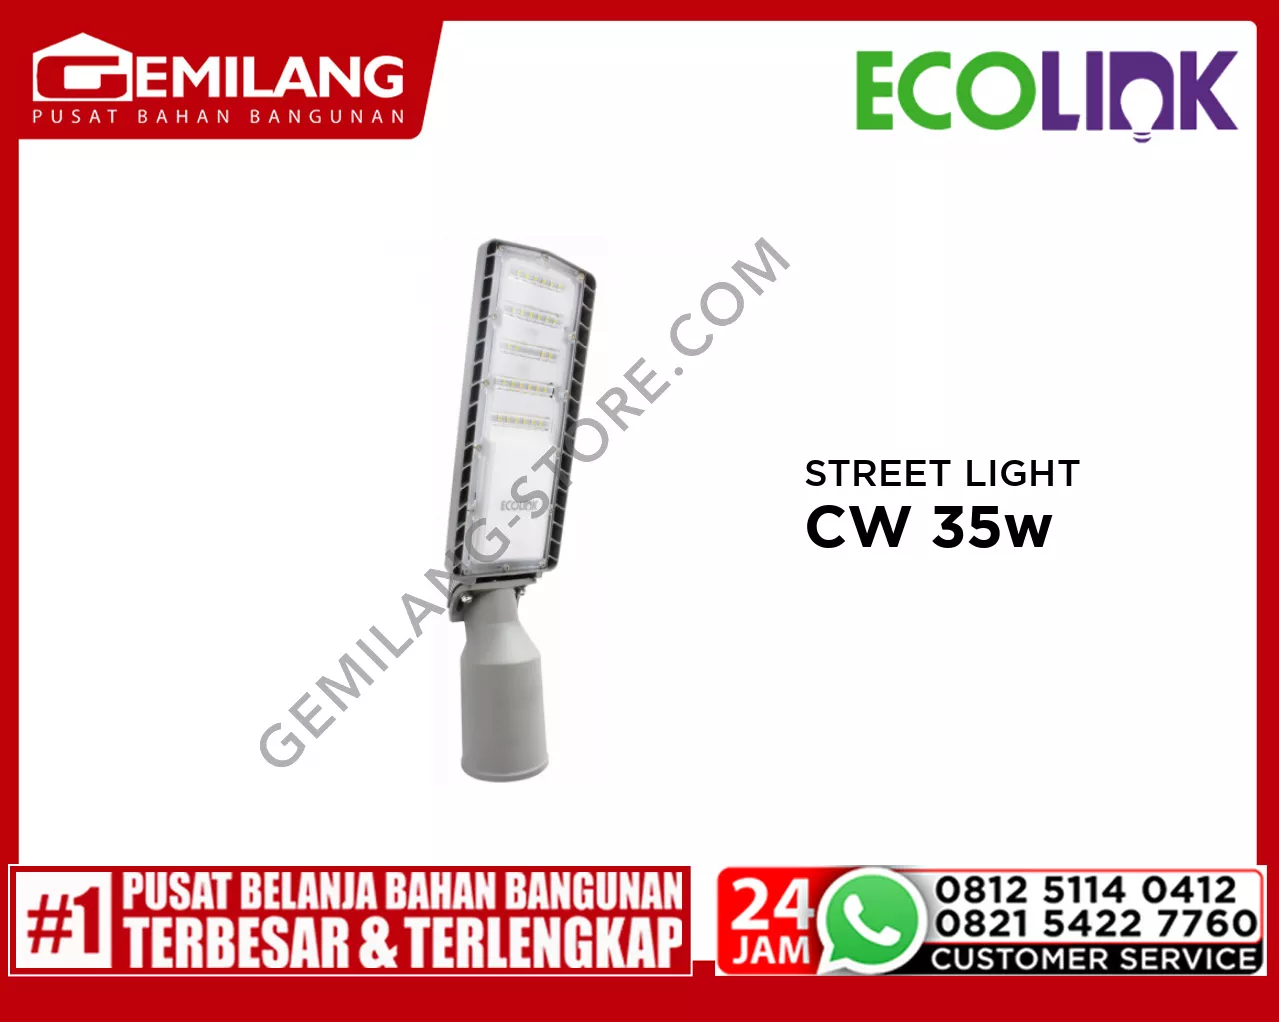 ECOLINK STREET LIGHT SL007 LED18 220-240V CW 35w